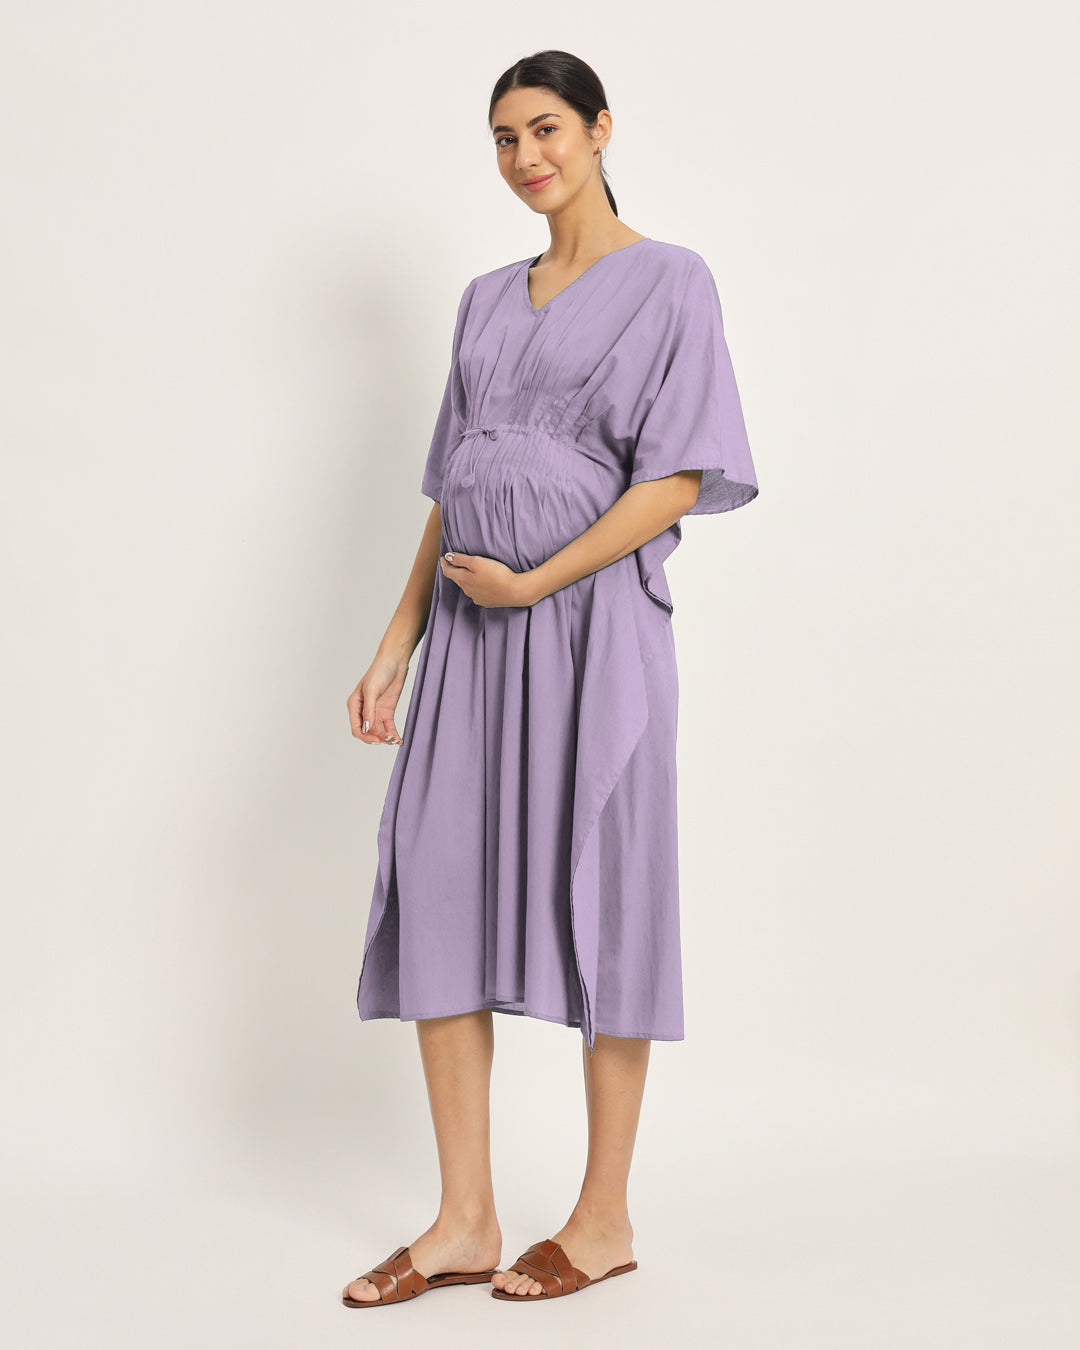 Combo: Iris Pink & Lilac Mommy Mode Maternity & Nursing Dress